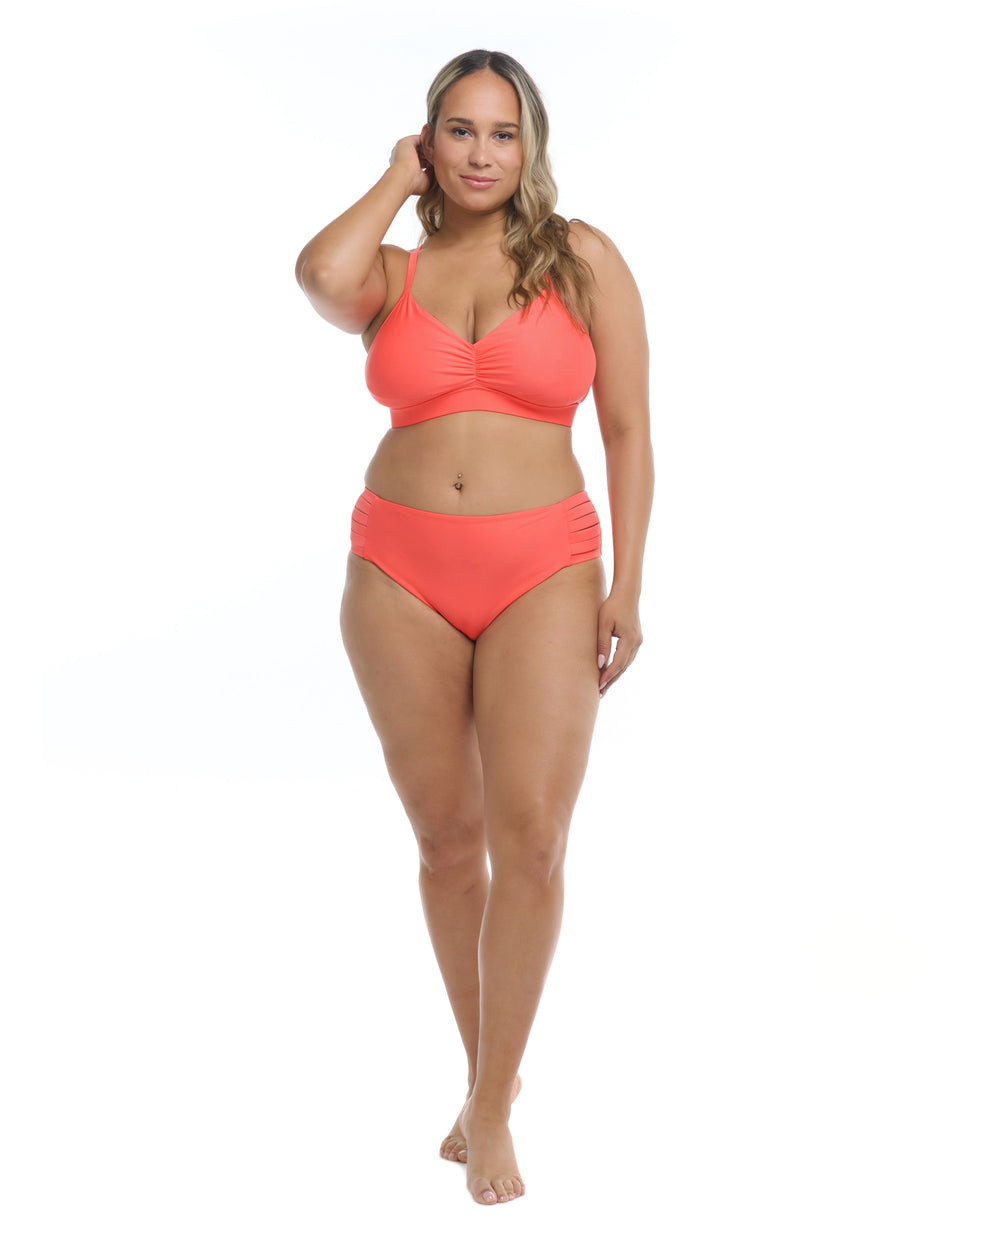 PMUYBHF Female Womens Bikini Tops for Large Chest Women's New Large Swimsuit  Bikini Plus Size Swimsuit A XL 